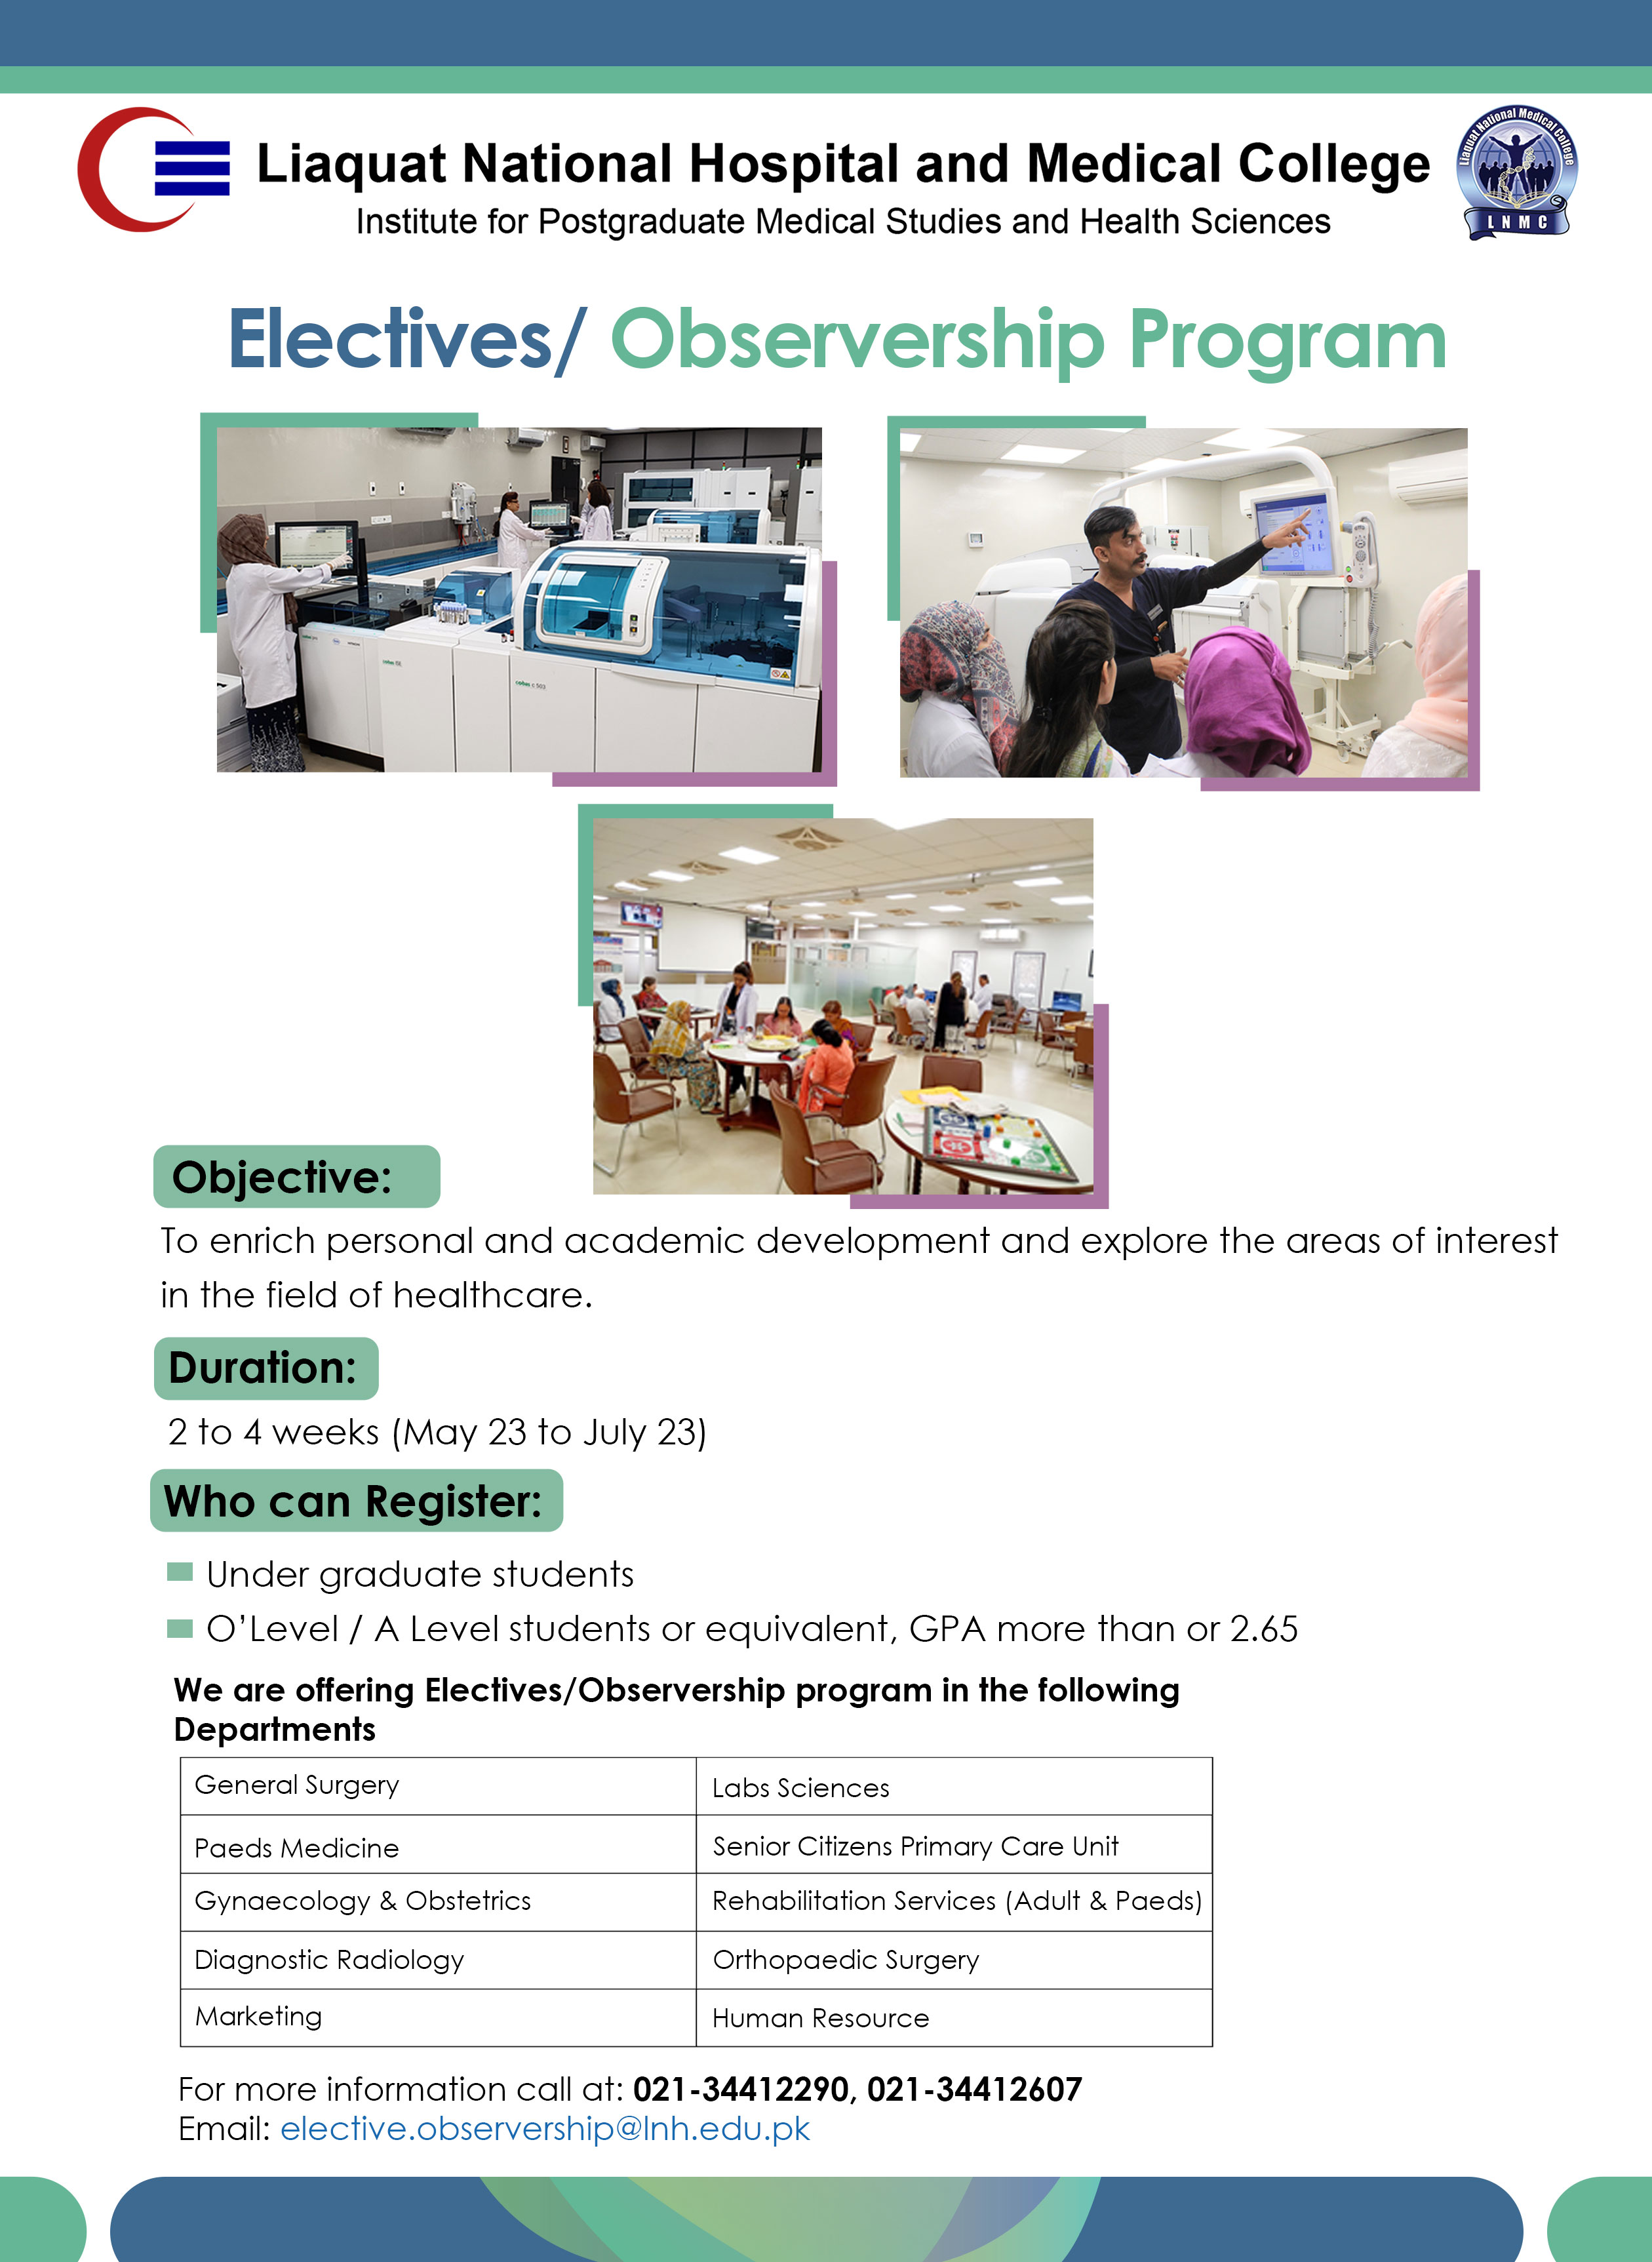 Electives and Observership Program